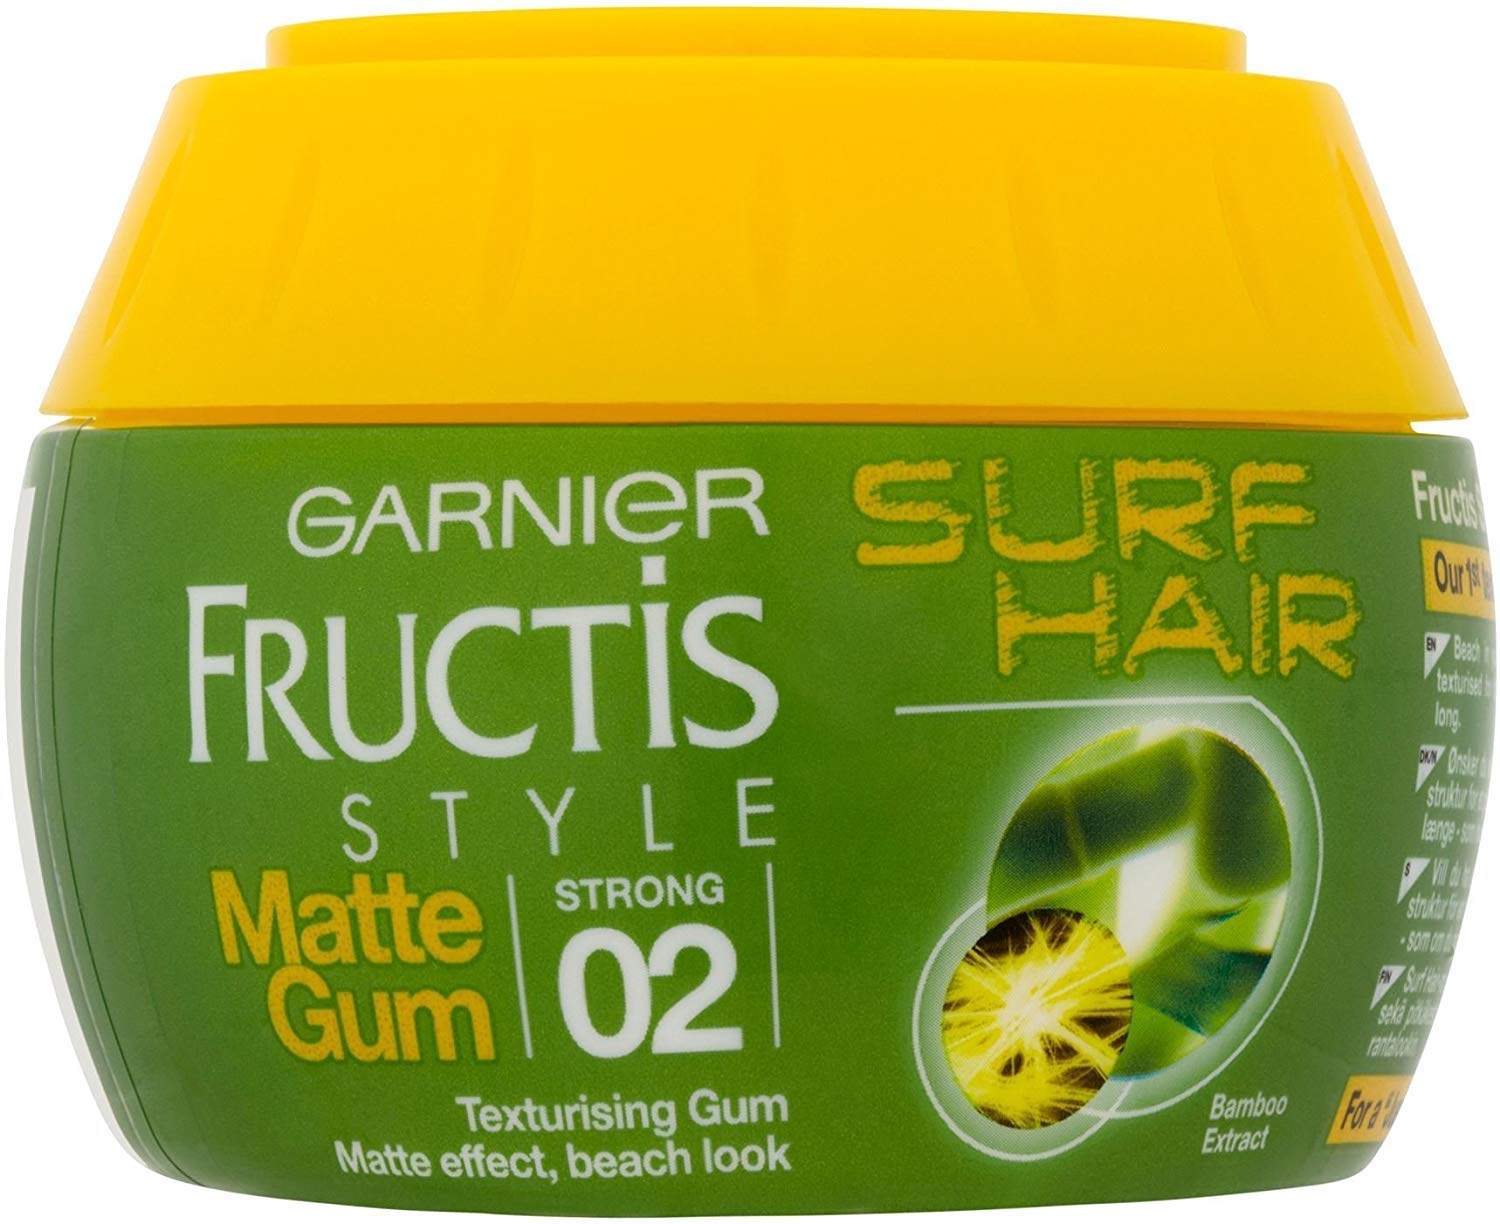 Mua 6 x Garnier Fructis Style Surf Hair Matte Texturising Gum 2 Strong  150ml trên Amazon Đức chính hãng 2023 | Giaonhan247